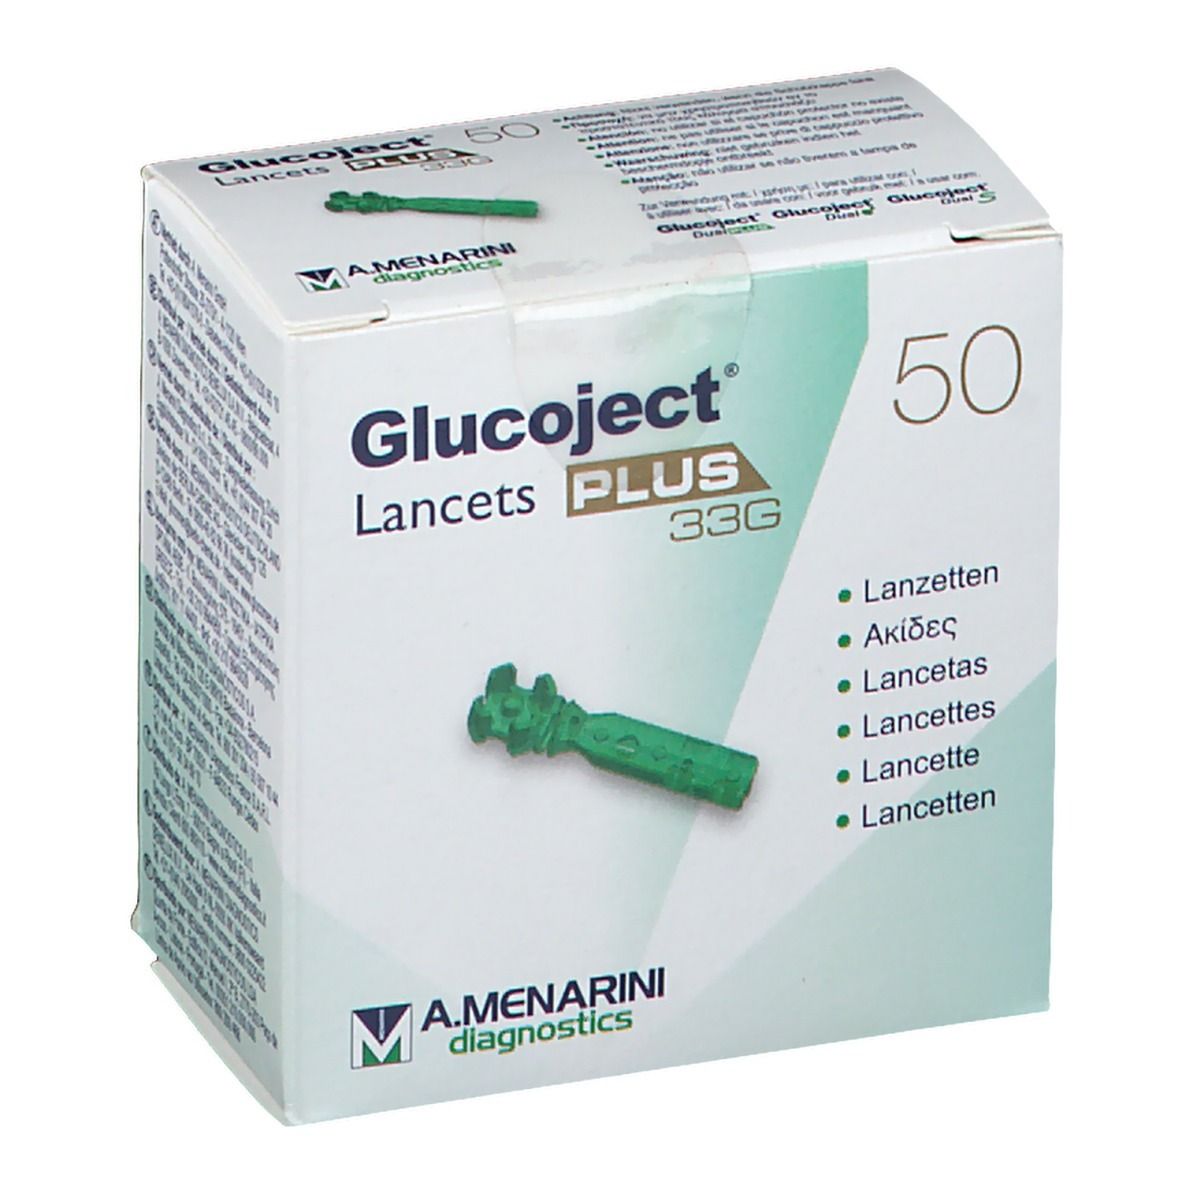 Image of Glucoject Lanzetten Plus